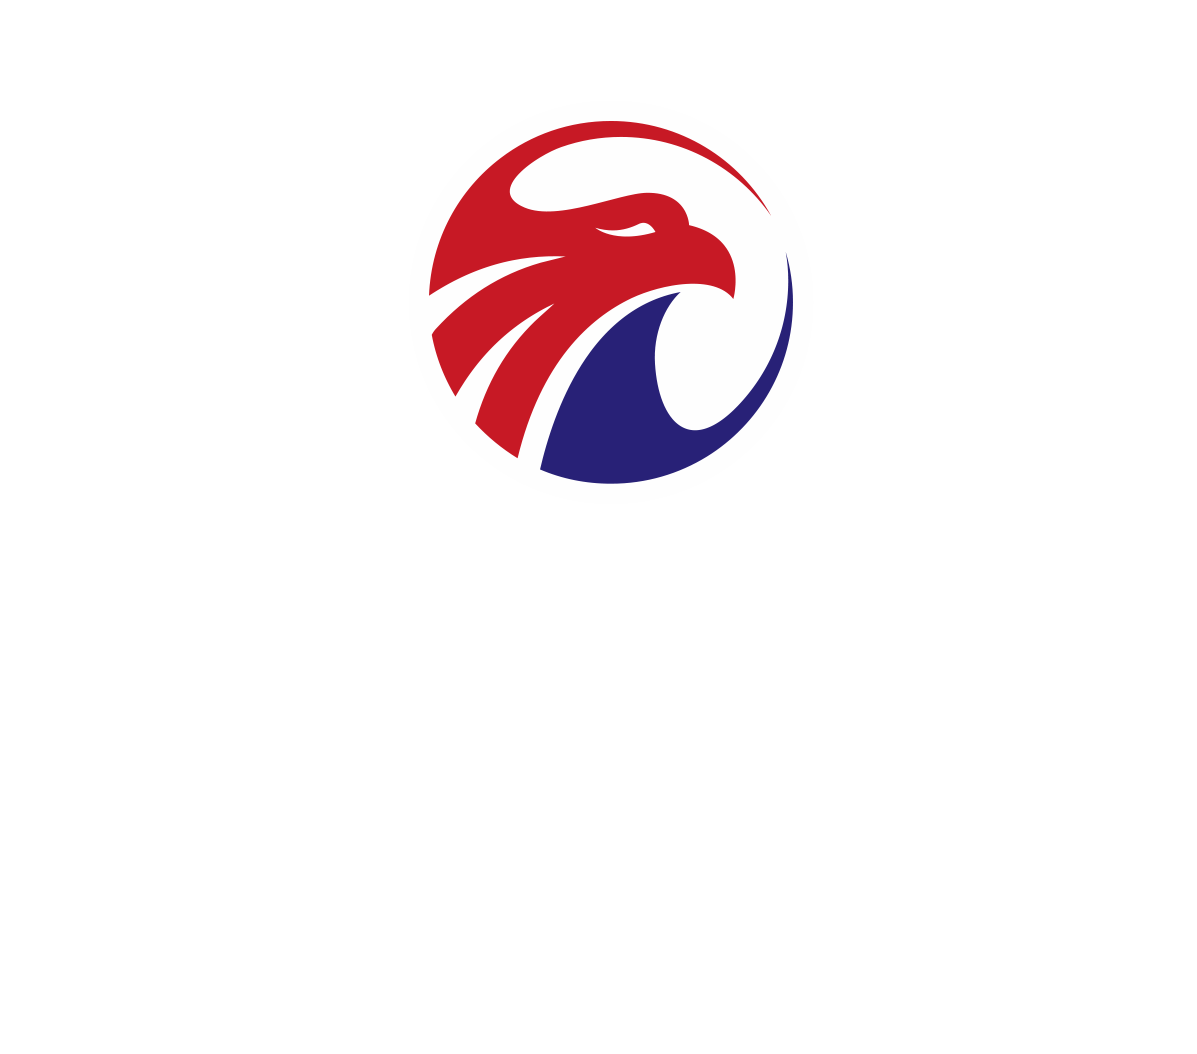 Emtees Academy